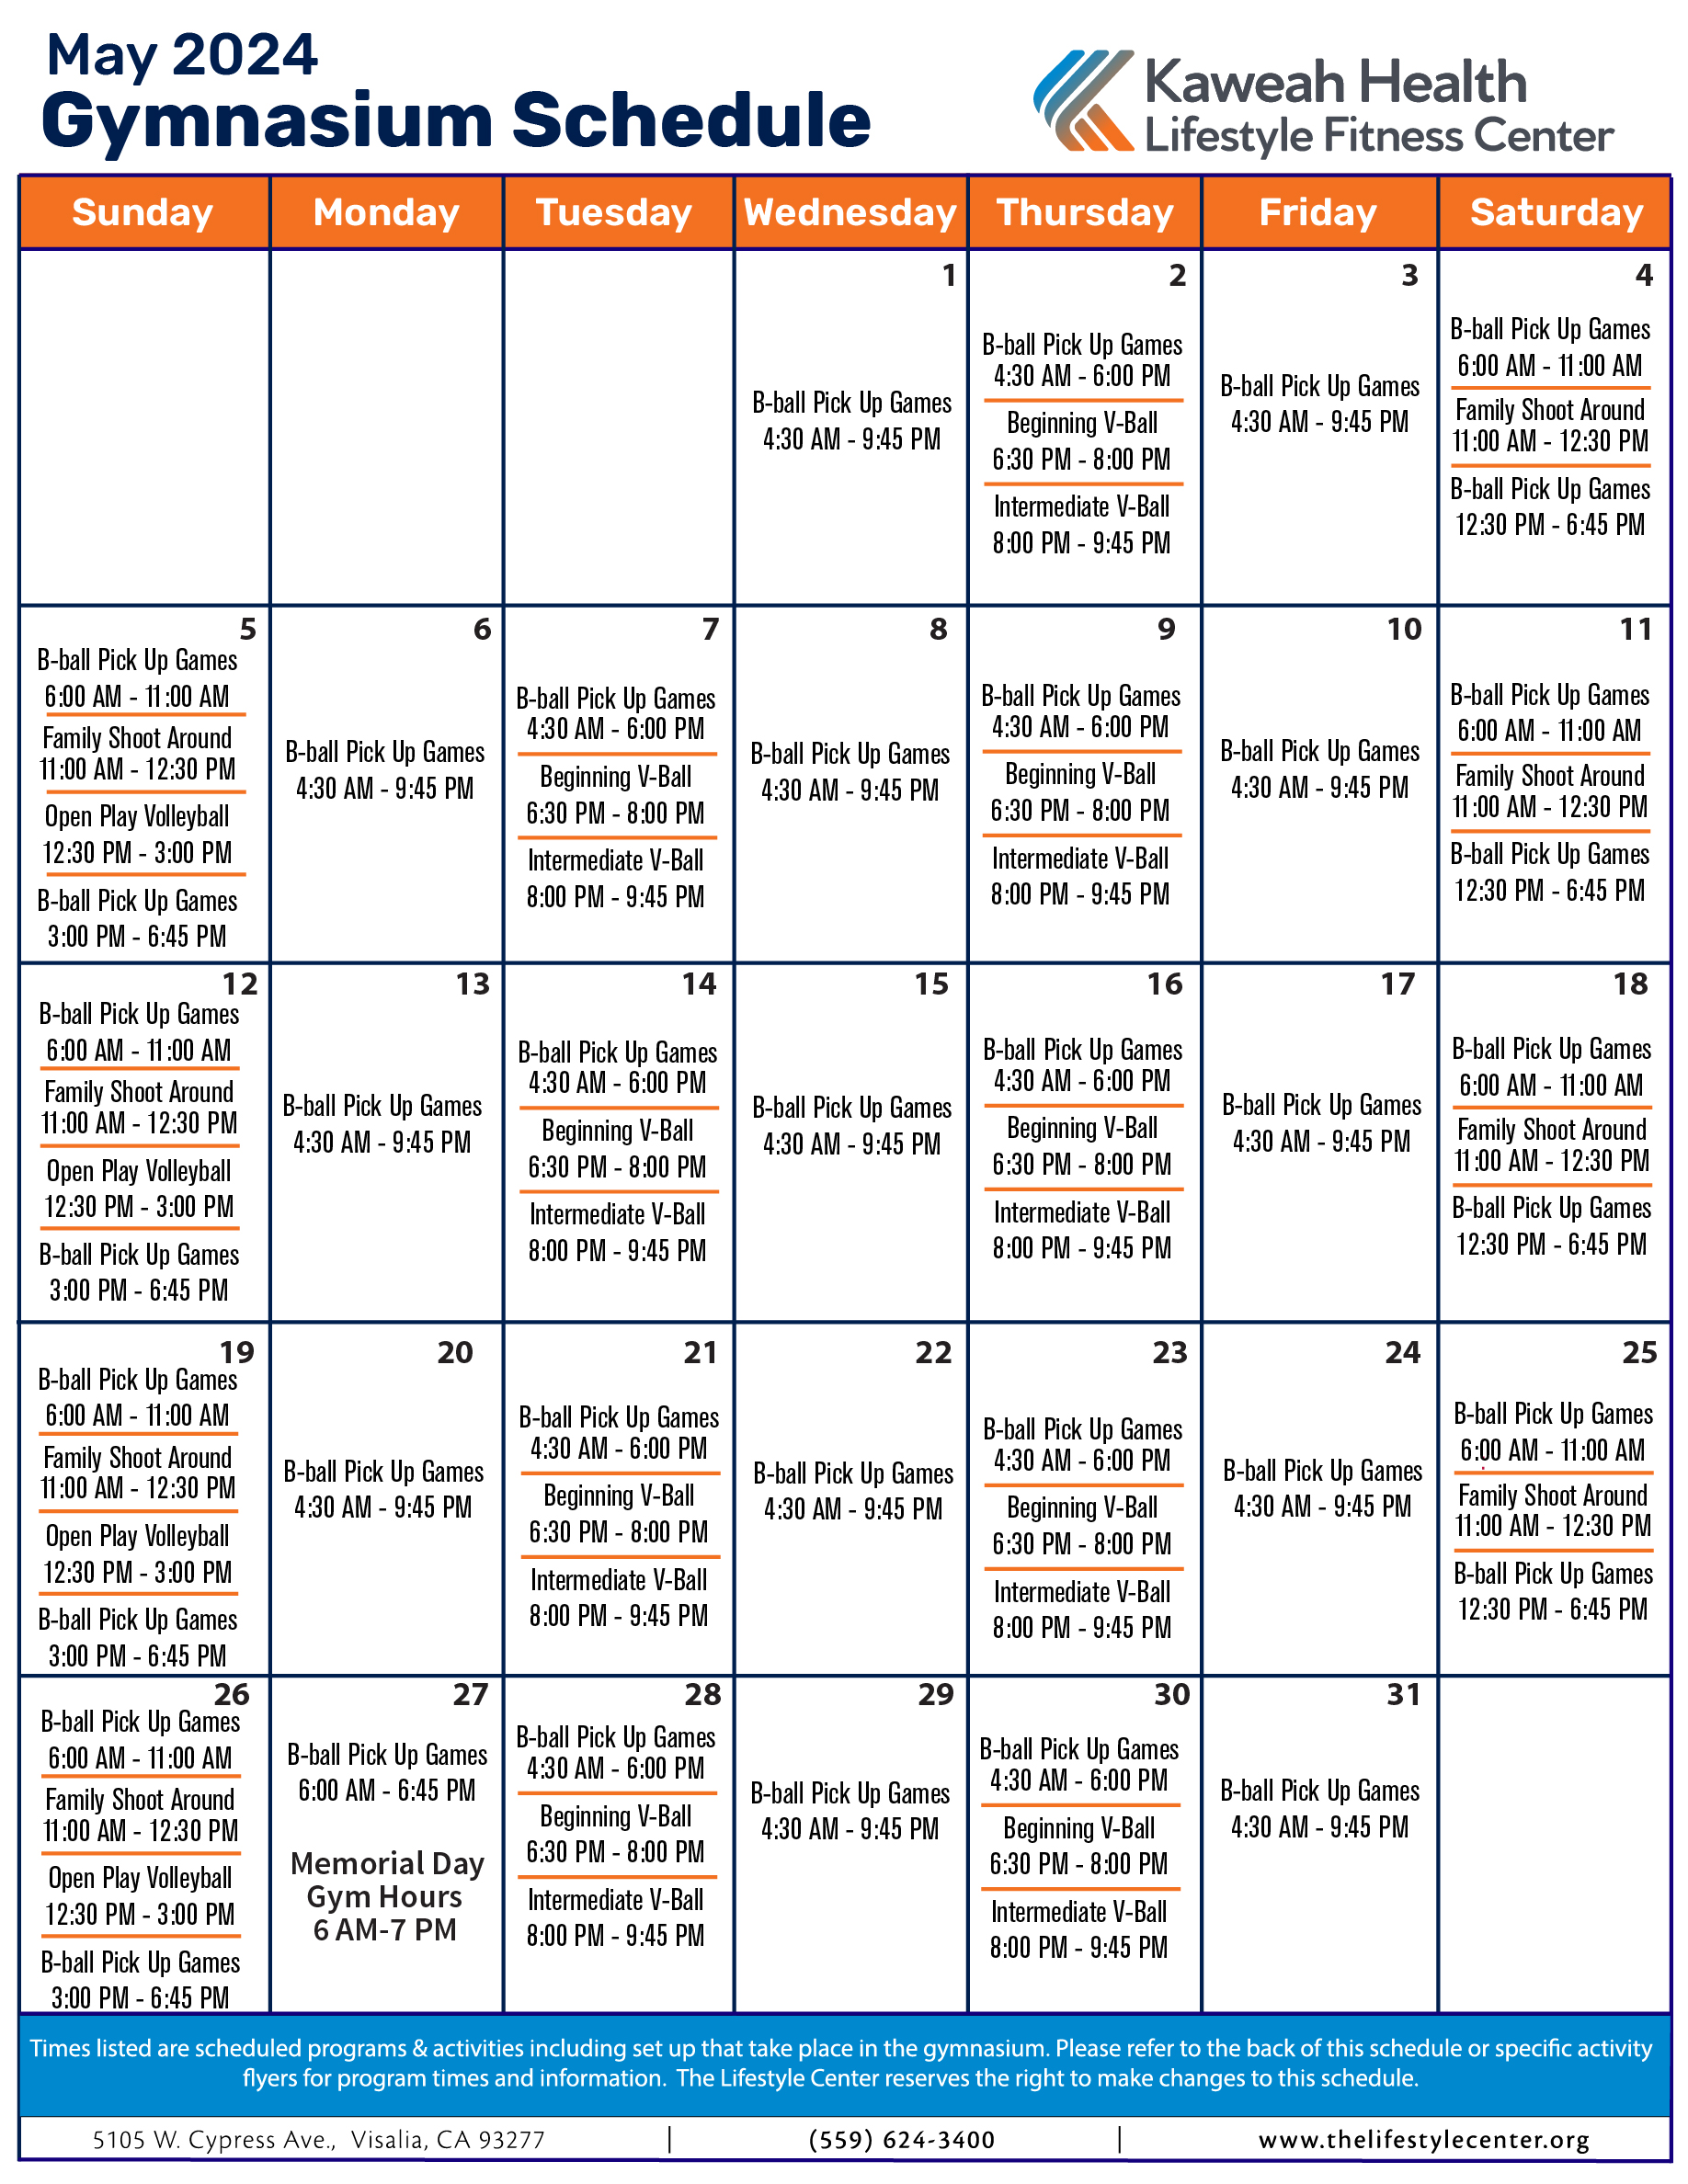 May 2024 Gymnasium schedule